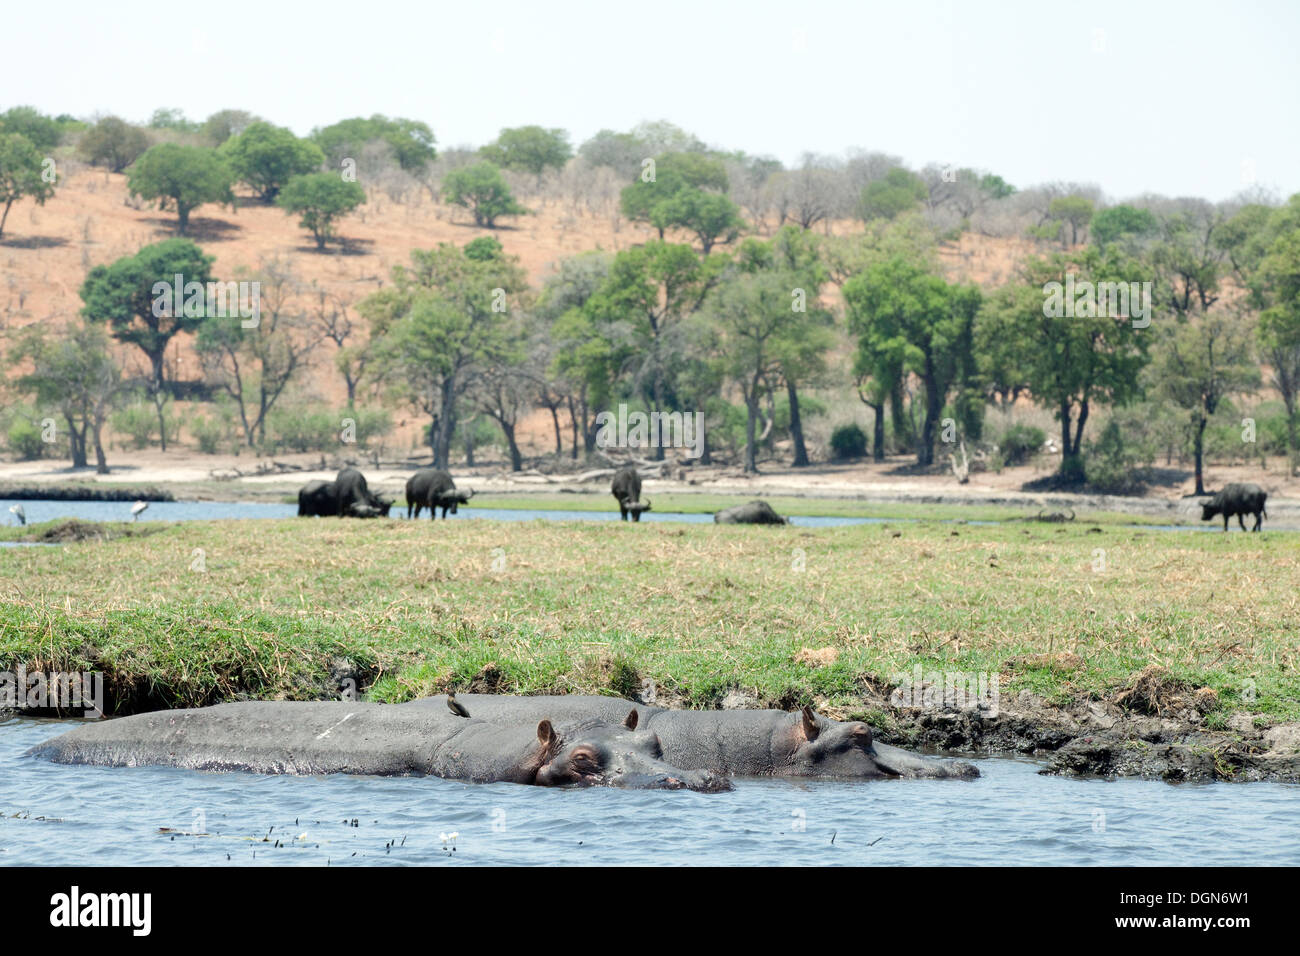 Flusspferde und Büffel Tierwelt, Chobe Fluss Chobe Nationalpark Safari Szene, Botswana, Afrika Stockfoto